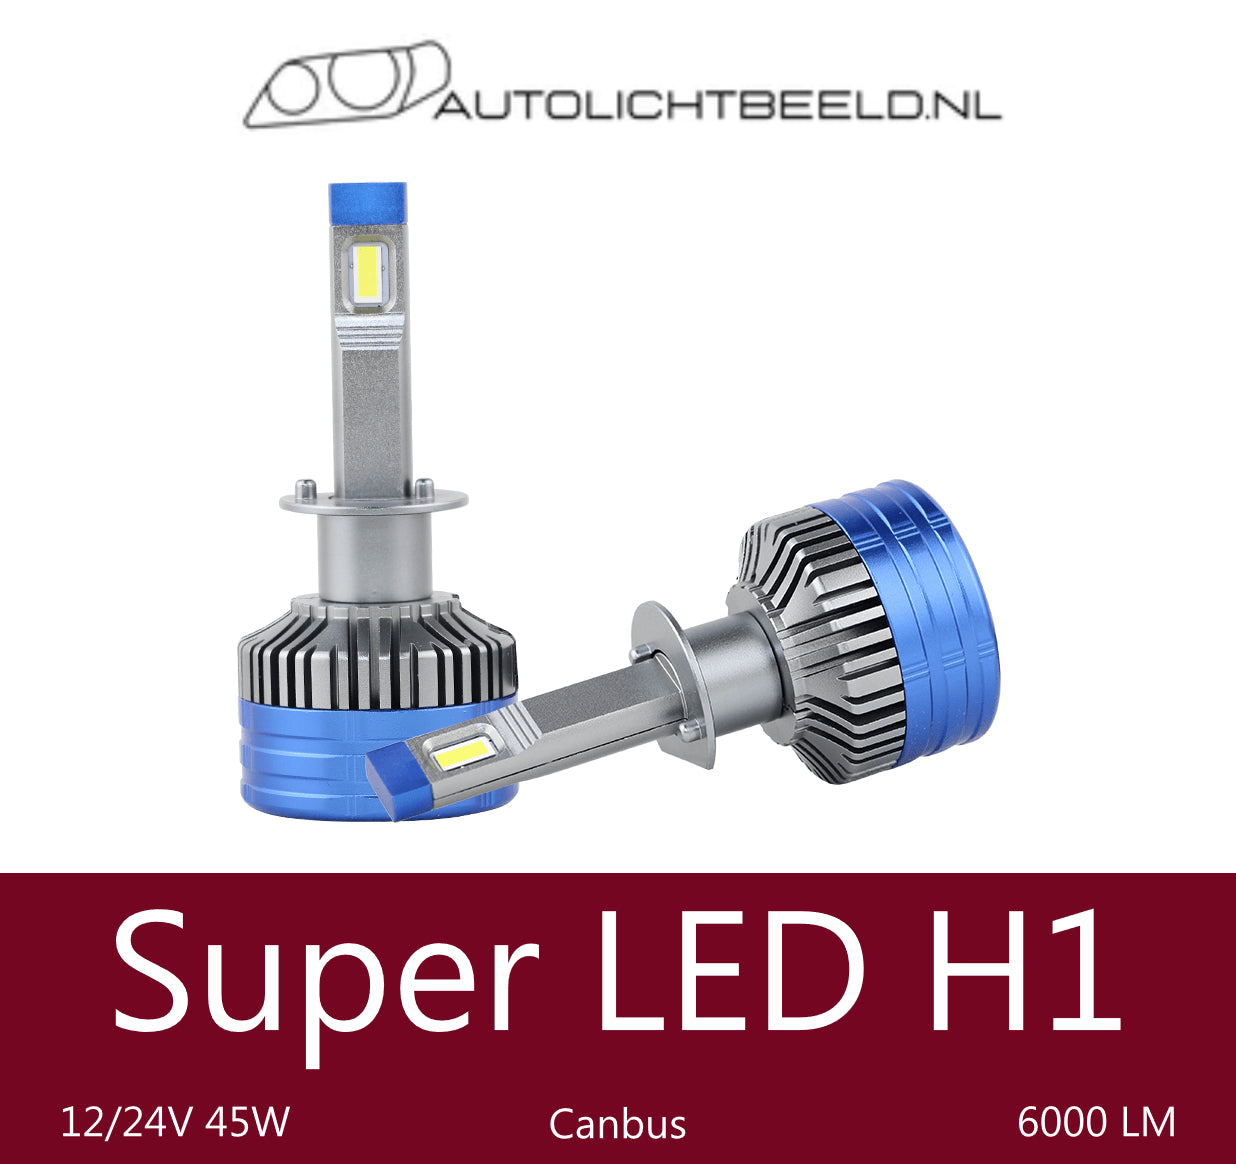 H1 Super LED - Autolichtbeeld